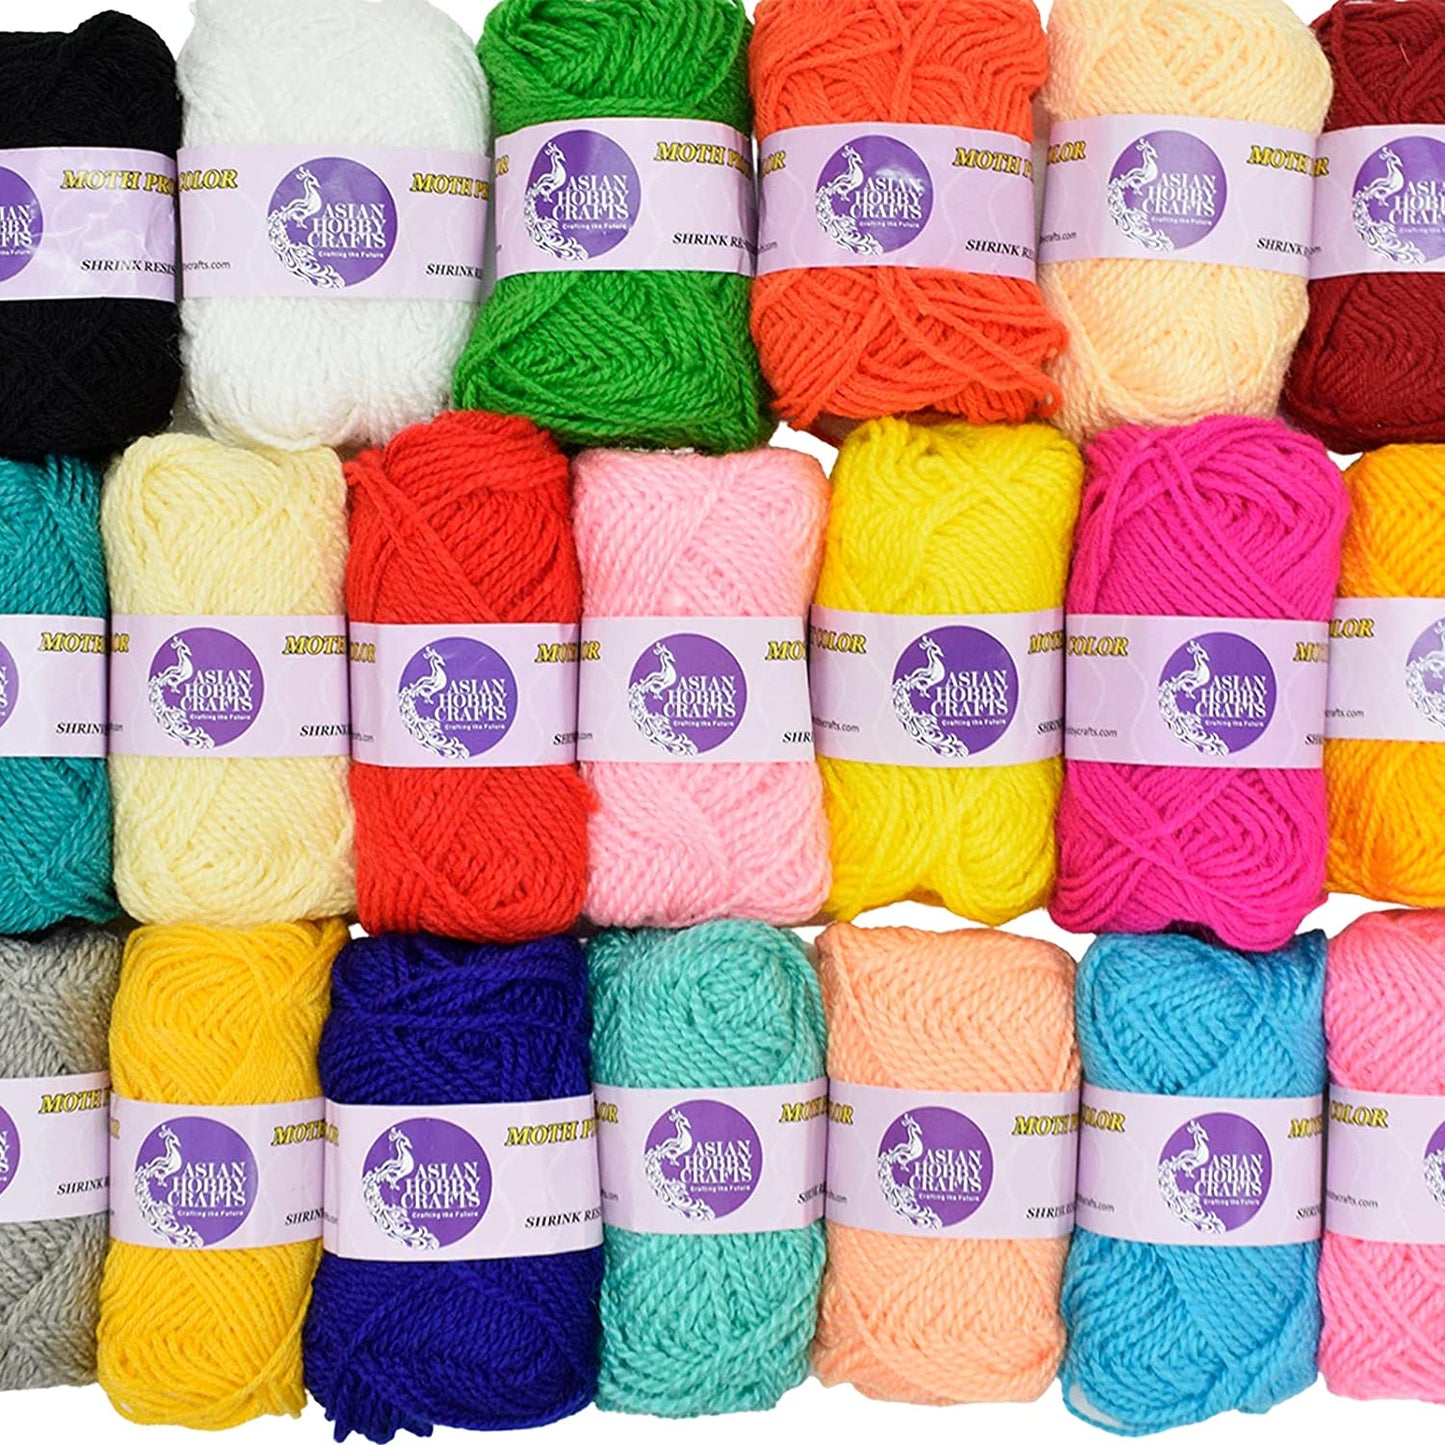 Wool Yarn Multi Colors Pack of 20 Balls